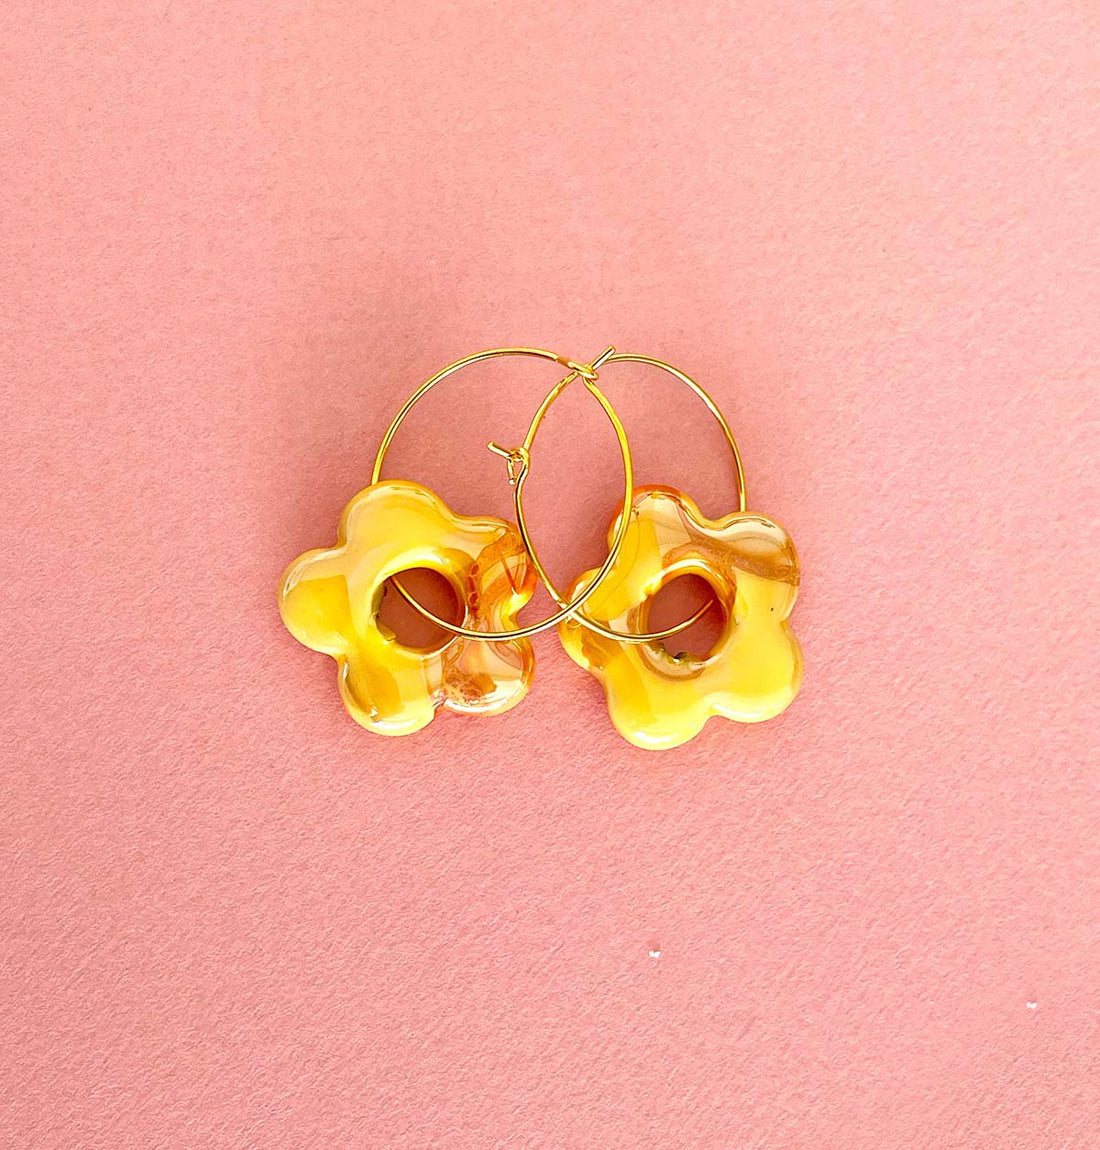 Ceramic earrings hoops yellow flower